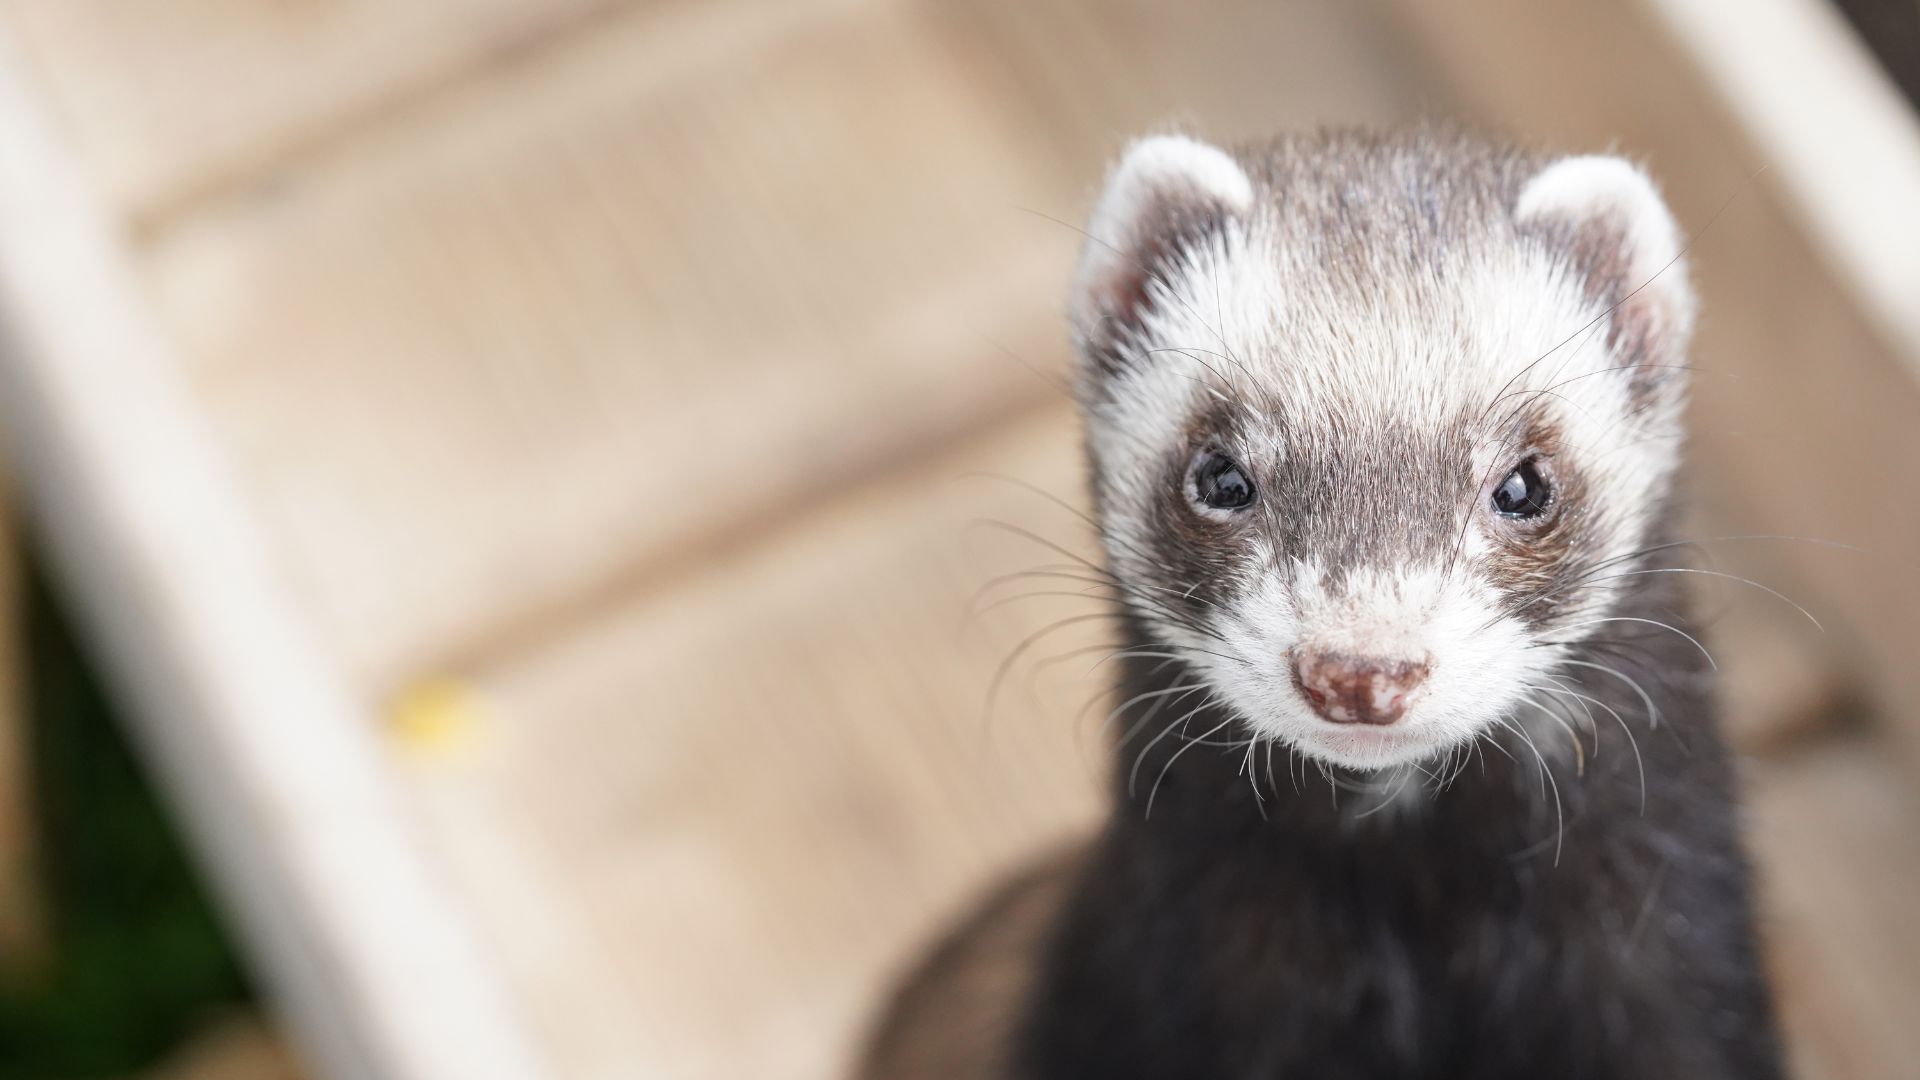 a close up of a ferret